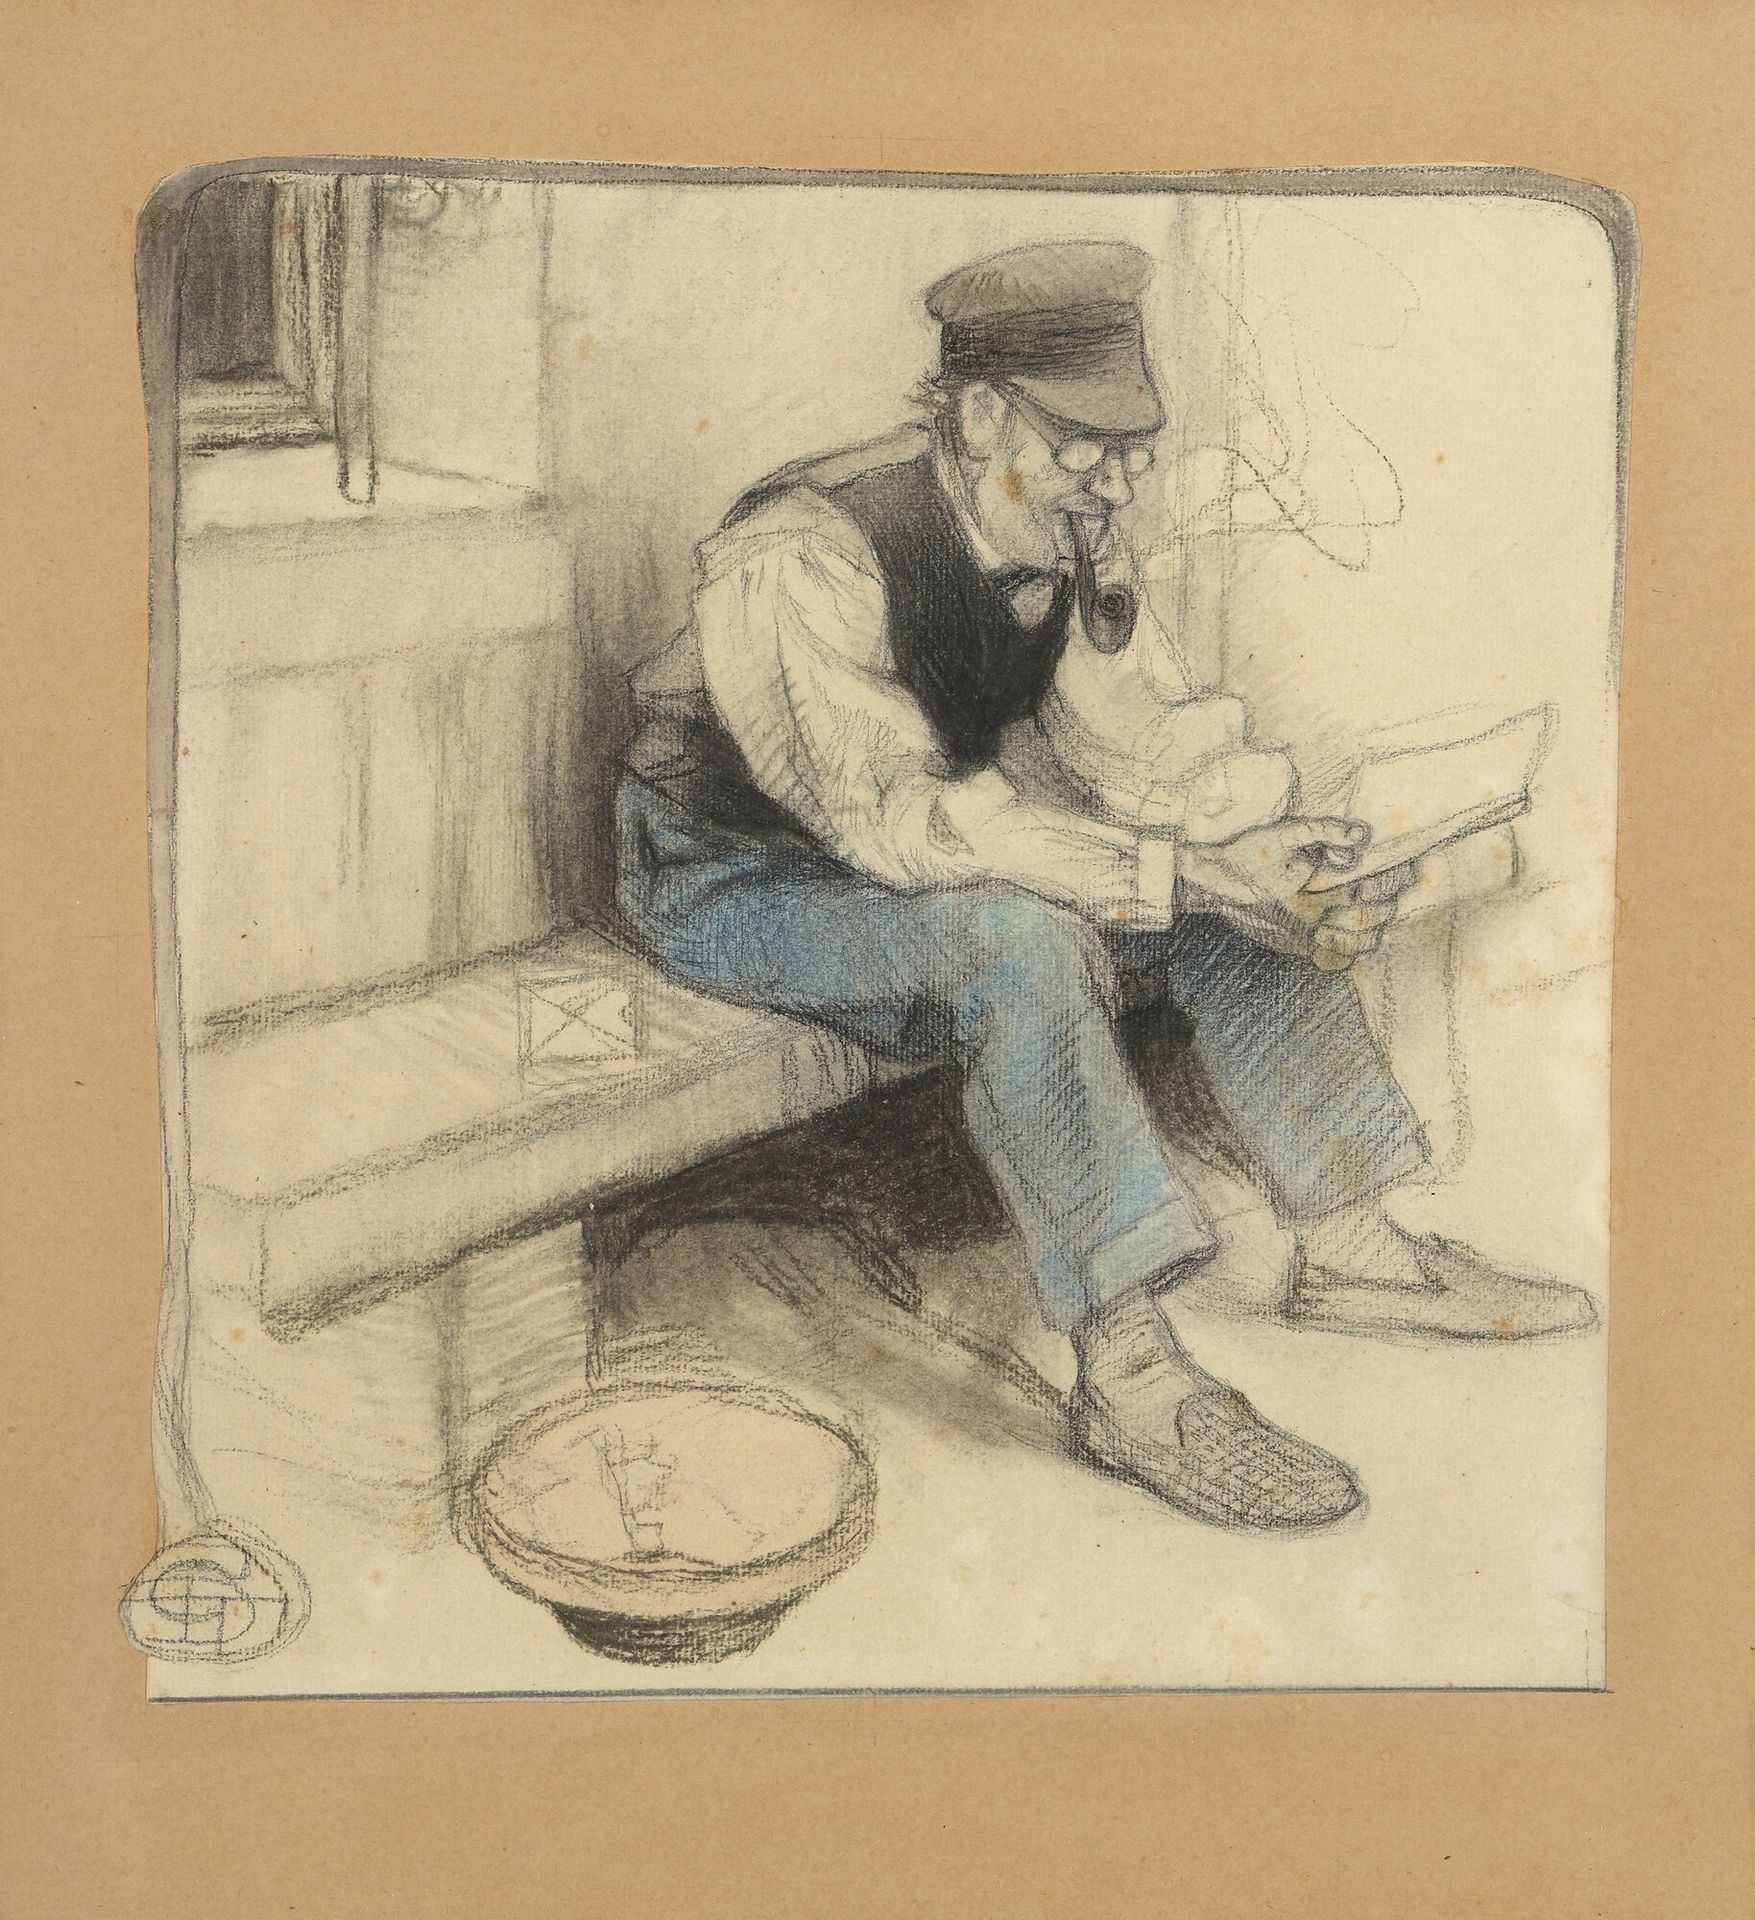 Null Géo DUPUIS(1875-1932)

函件

纸上黑蓝铅笔。

左下角有字母图案。

30 x 27厘米